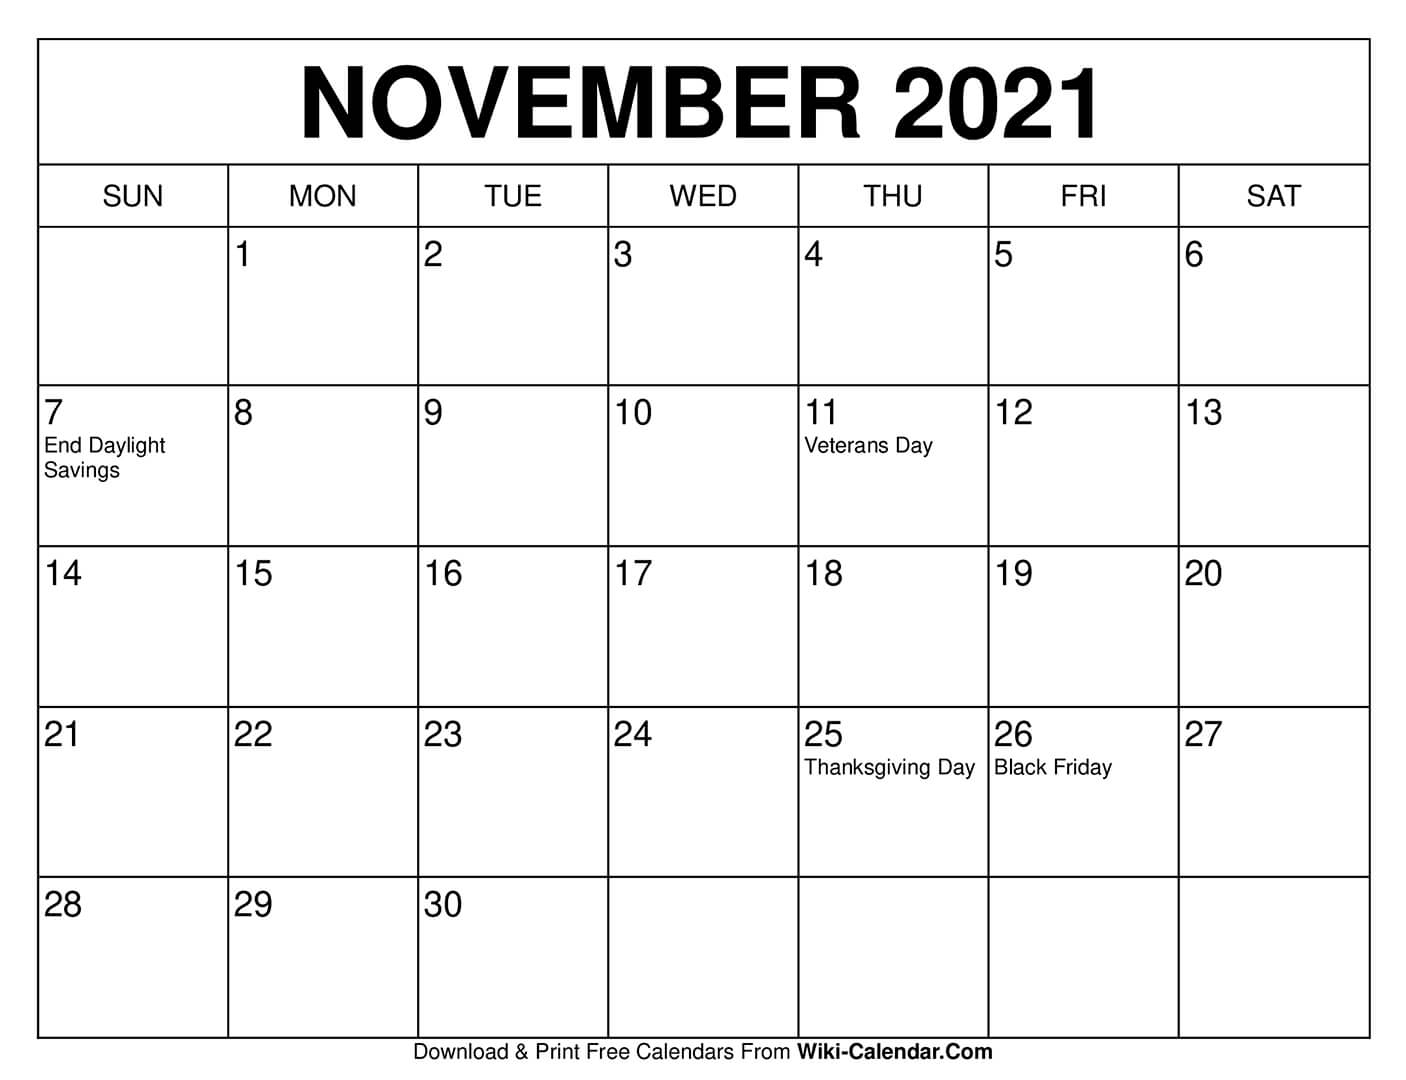 November Calandars 2021 Best Calendar Example